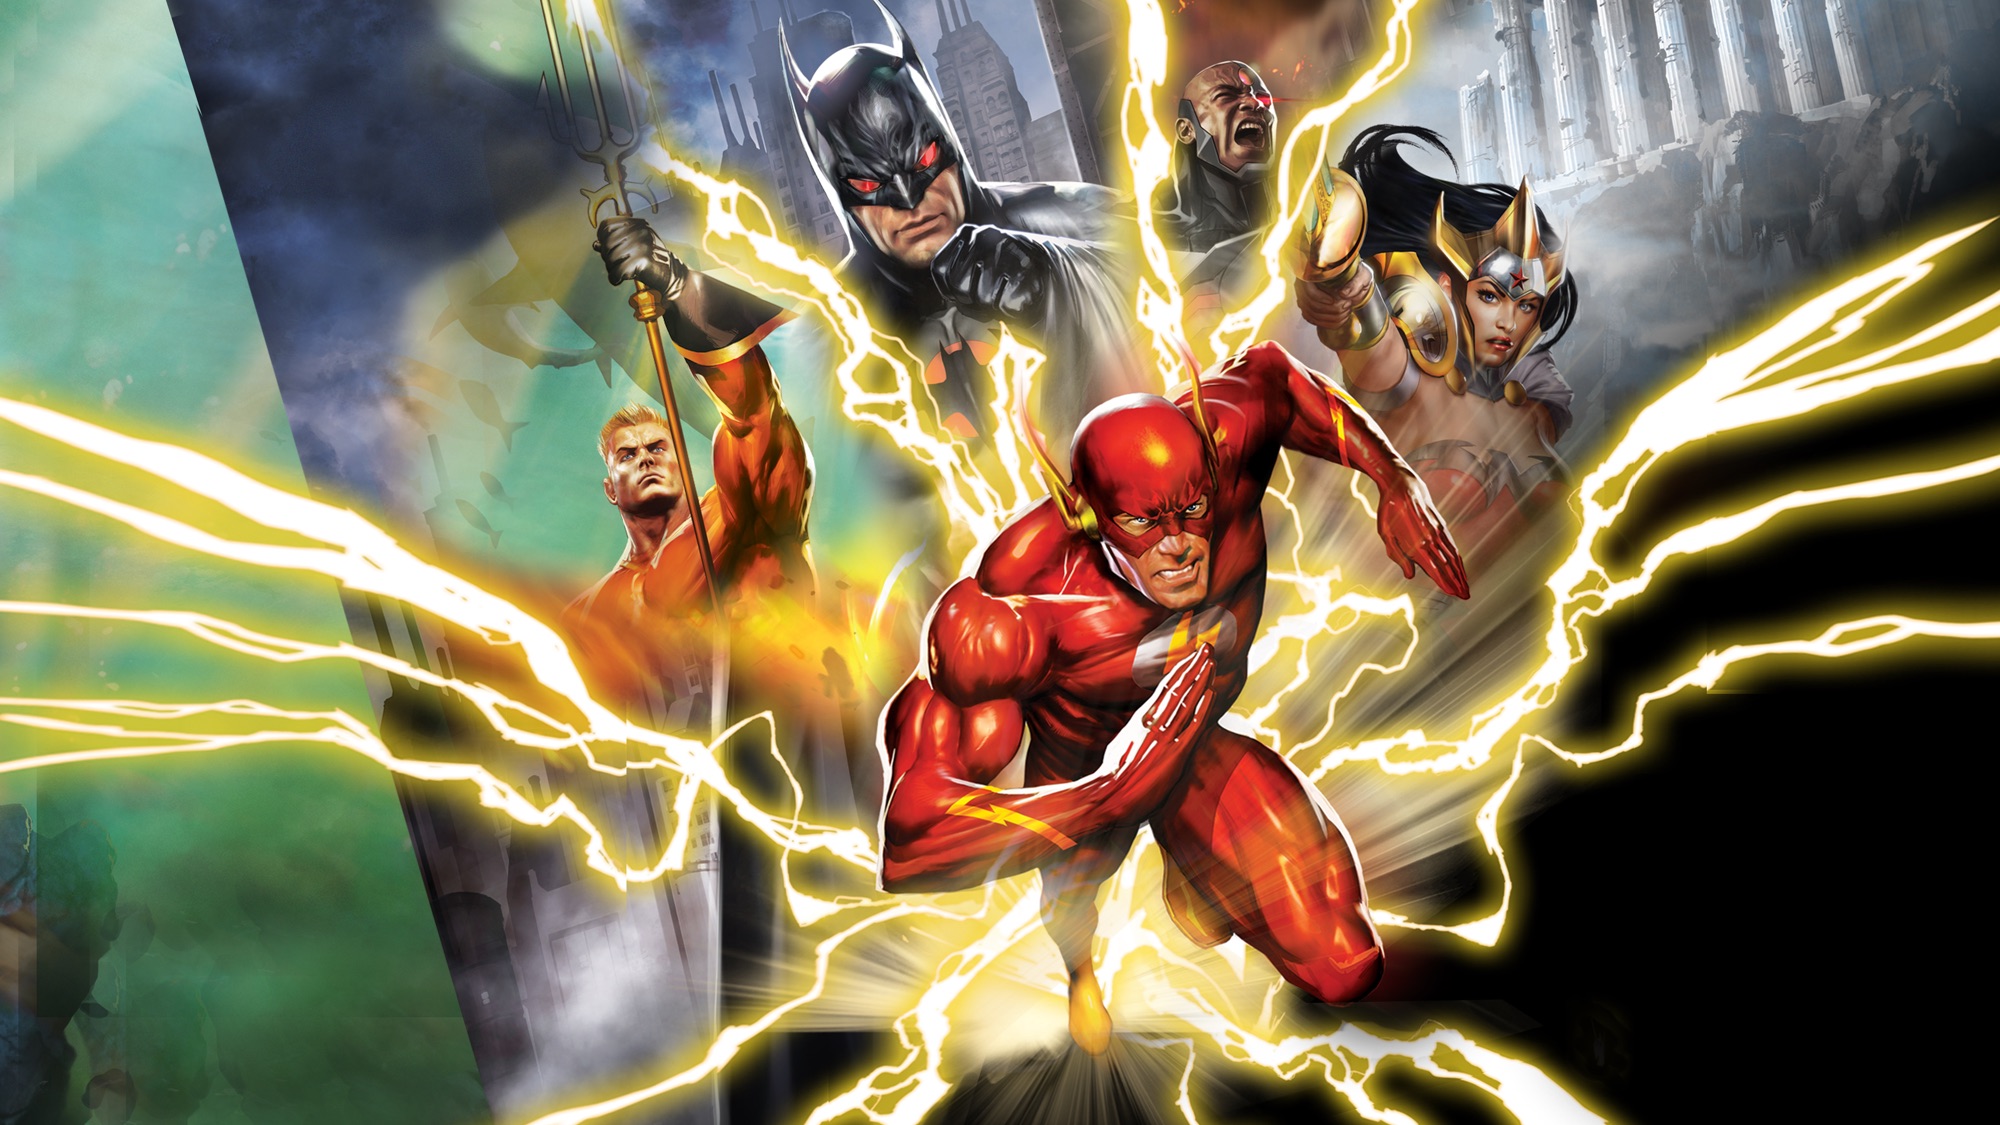 Download mobile wallpaper Batman, Flash, Movie, Dc Comics, Aquaman, Wonder Woman, Cyborg (Dc Comics), Justice League, Justice League: The Flashpoint Paradox for free.